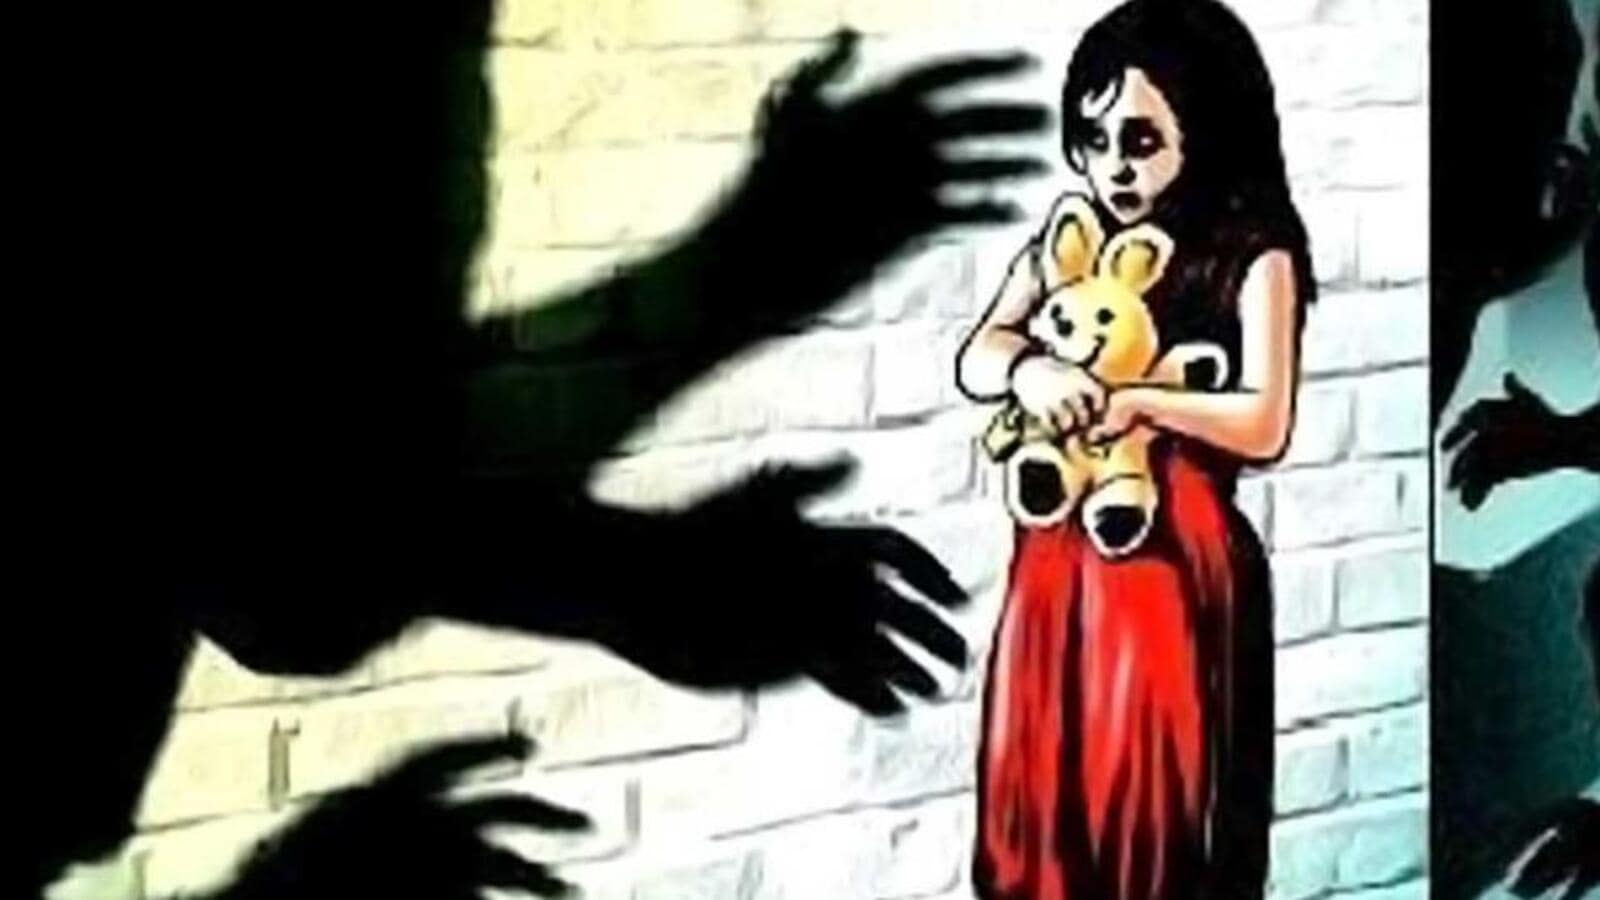 Sleeping Rap Jabardasti Xxx Video - 8 men rape, film and blackmail 17-year-old Rajasthan girl. Then release  video - Hindustan Times